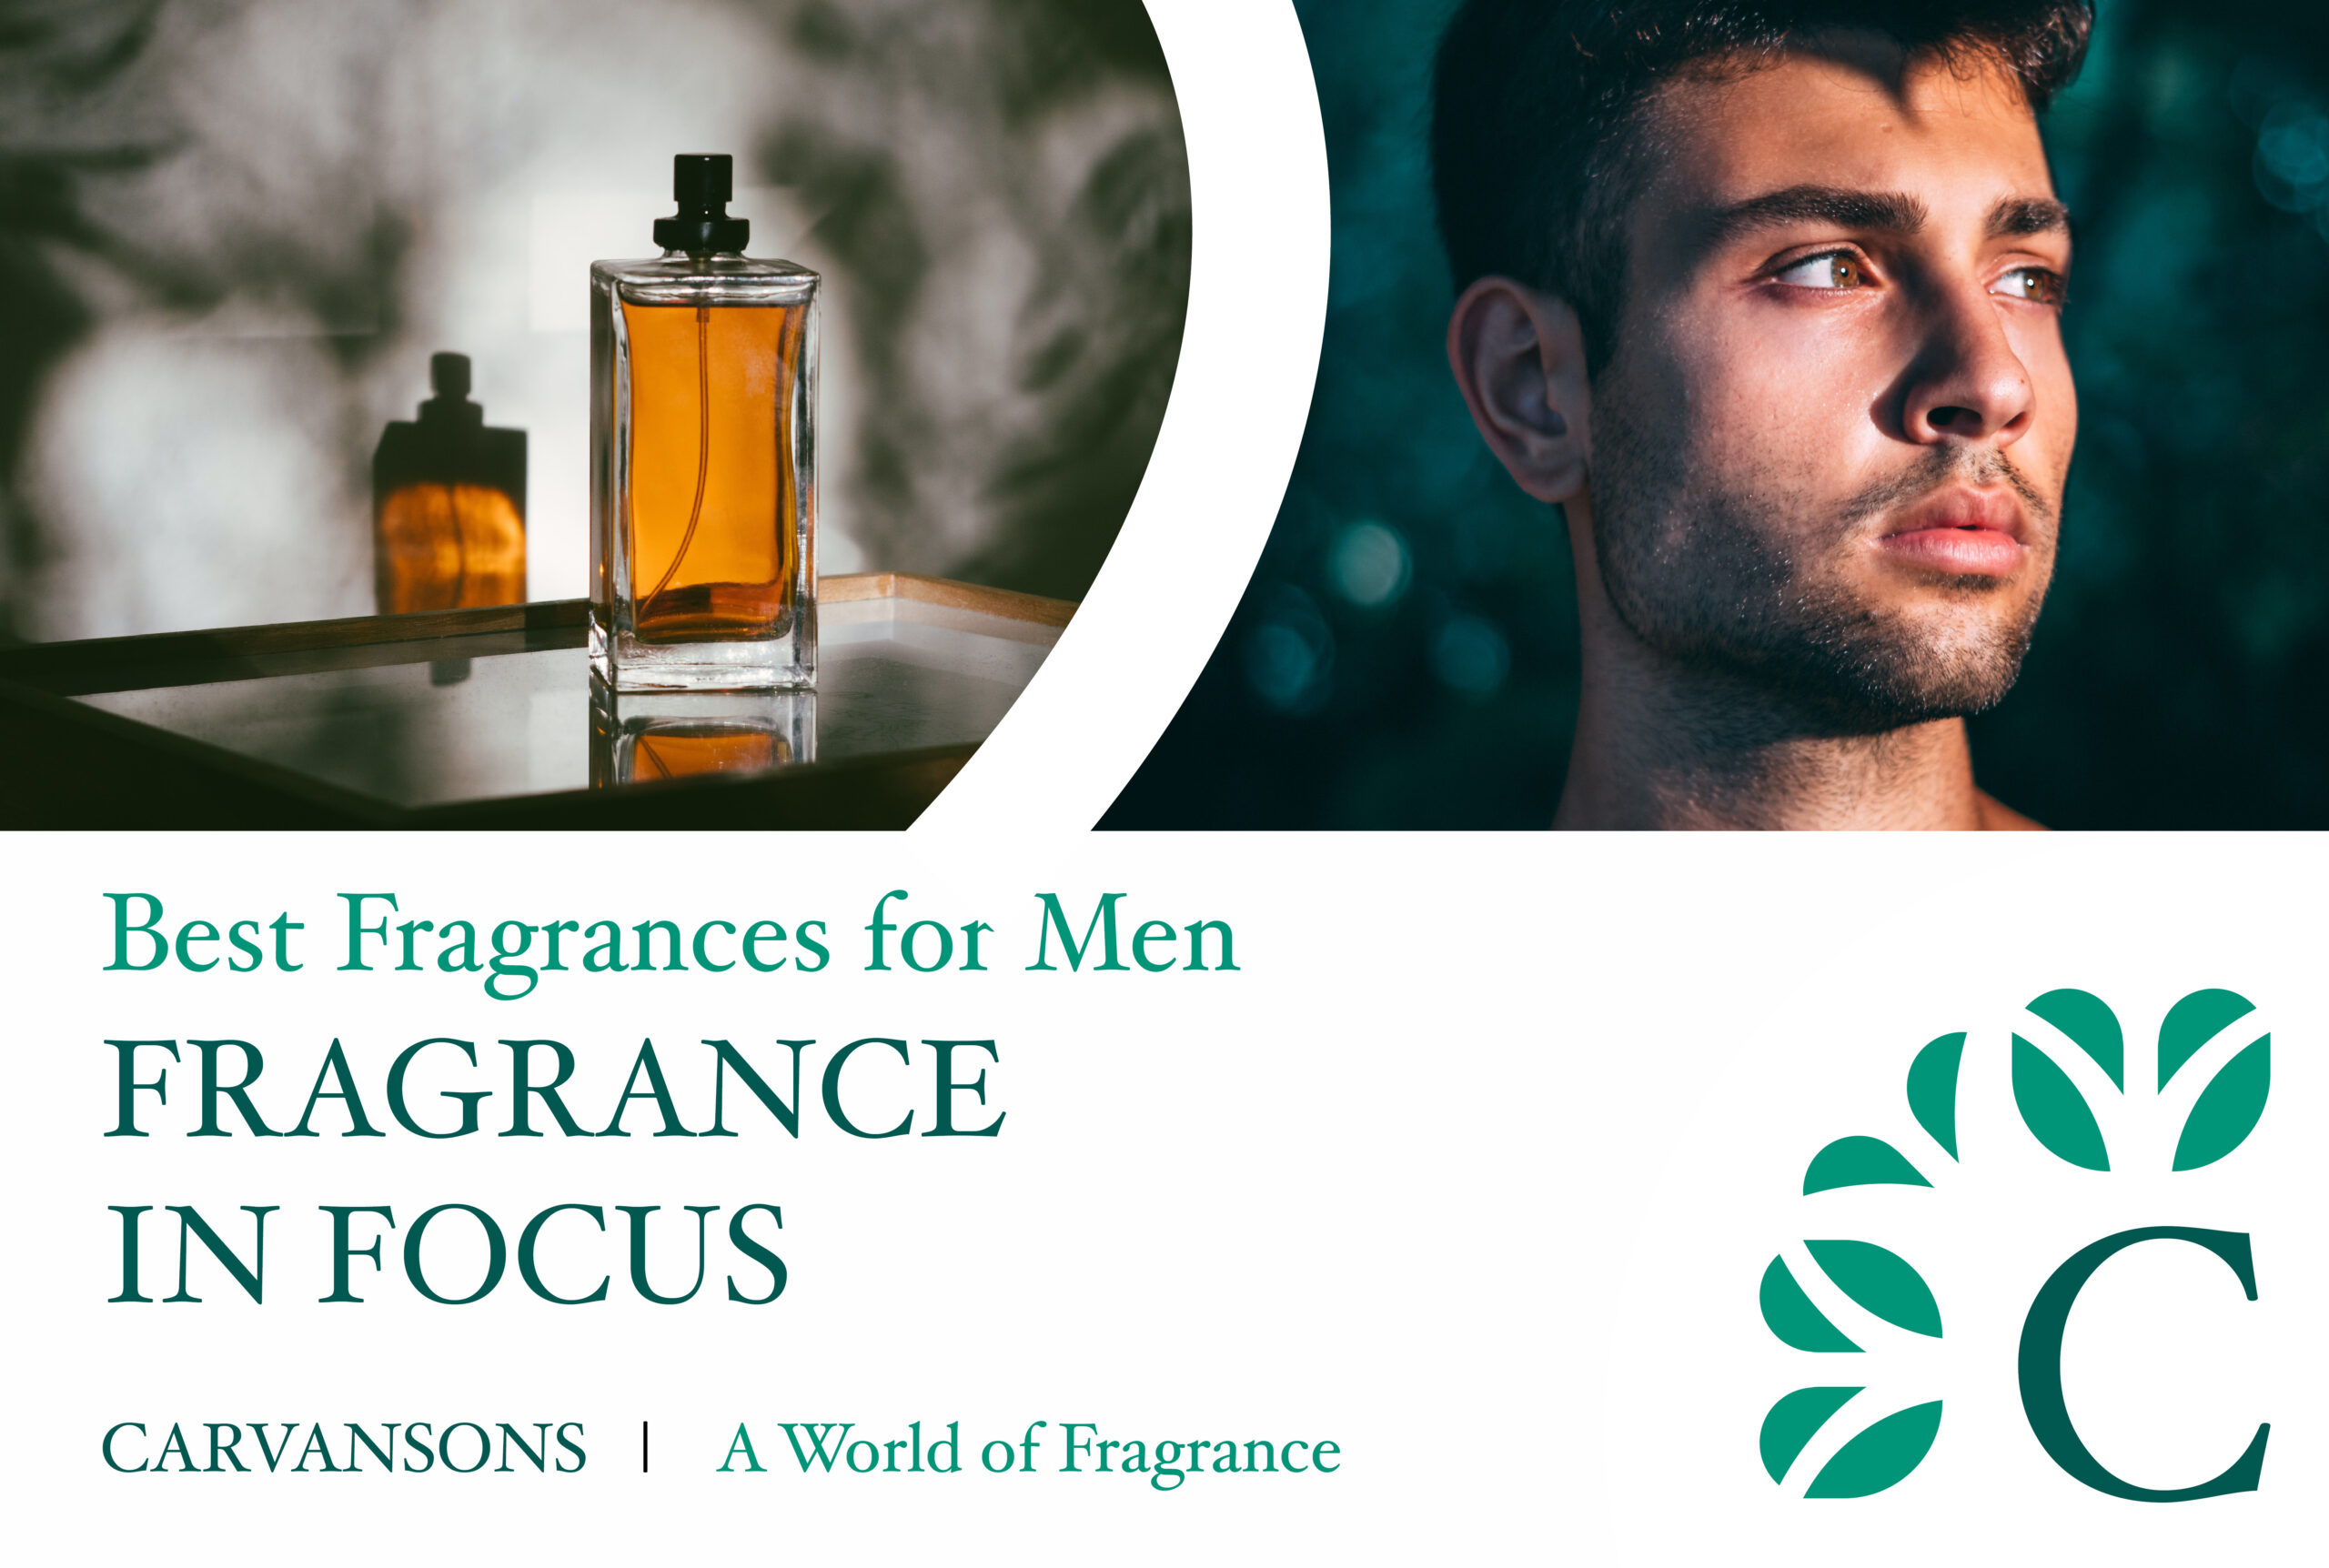 Let's hear it for the Boys: The Best Fragrances for Men